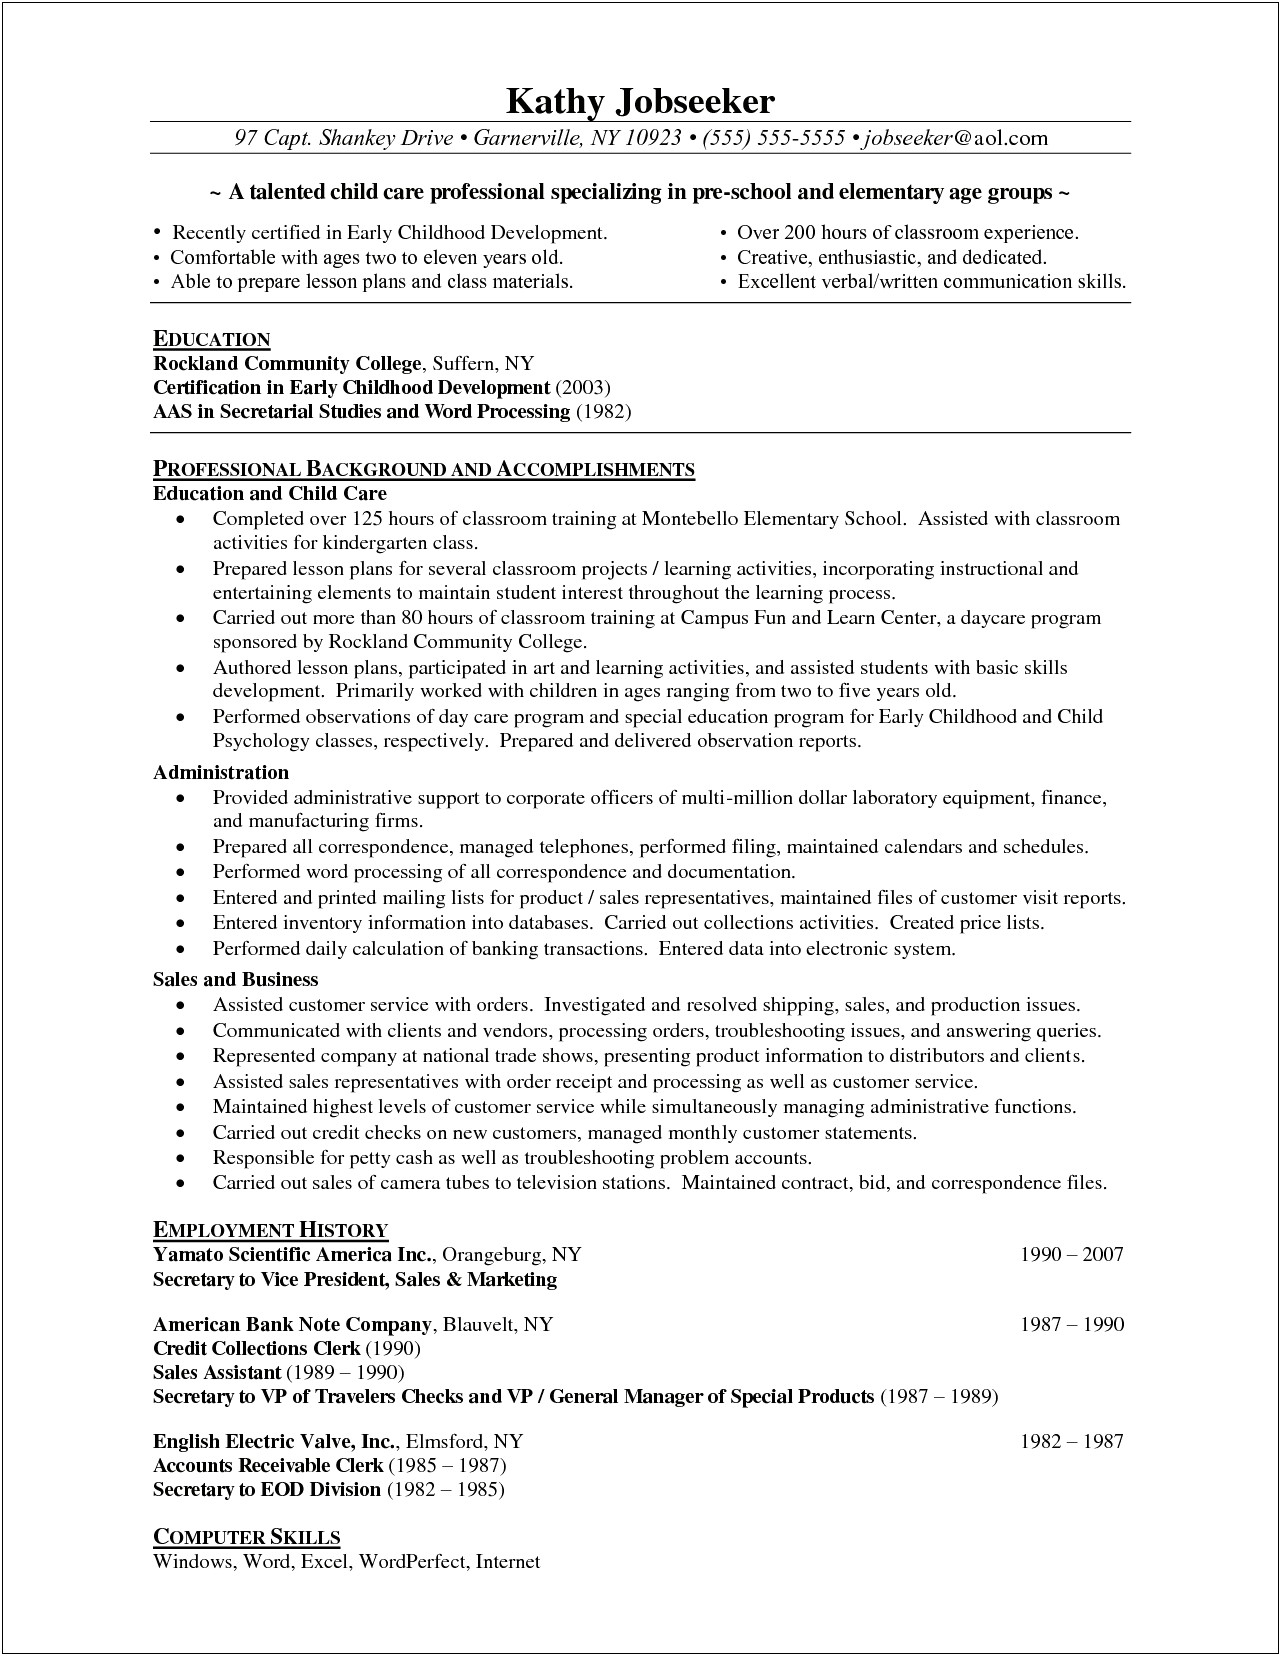 Resume Objective For Elementary School Secretary